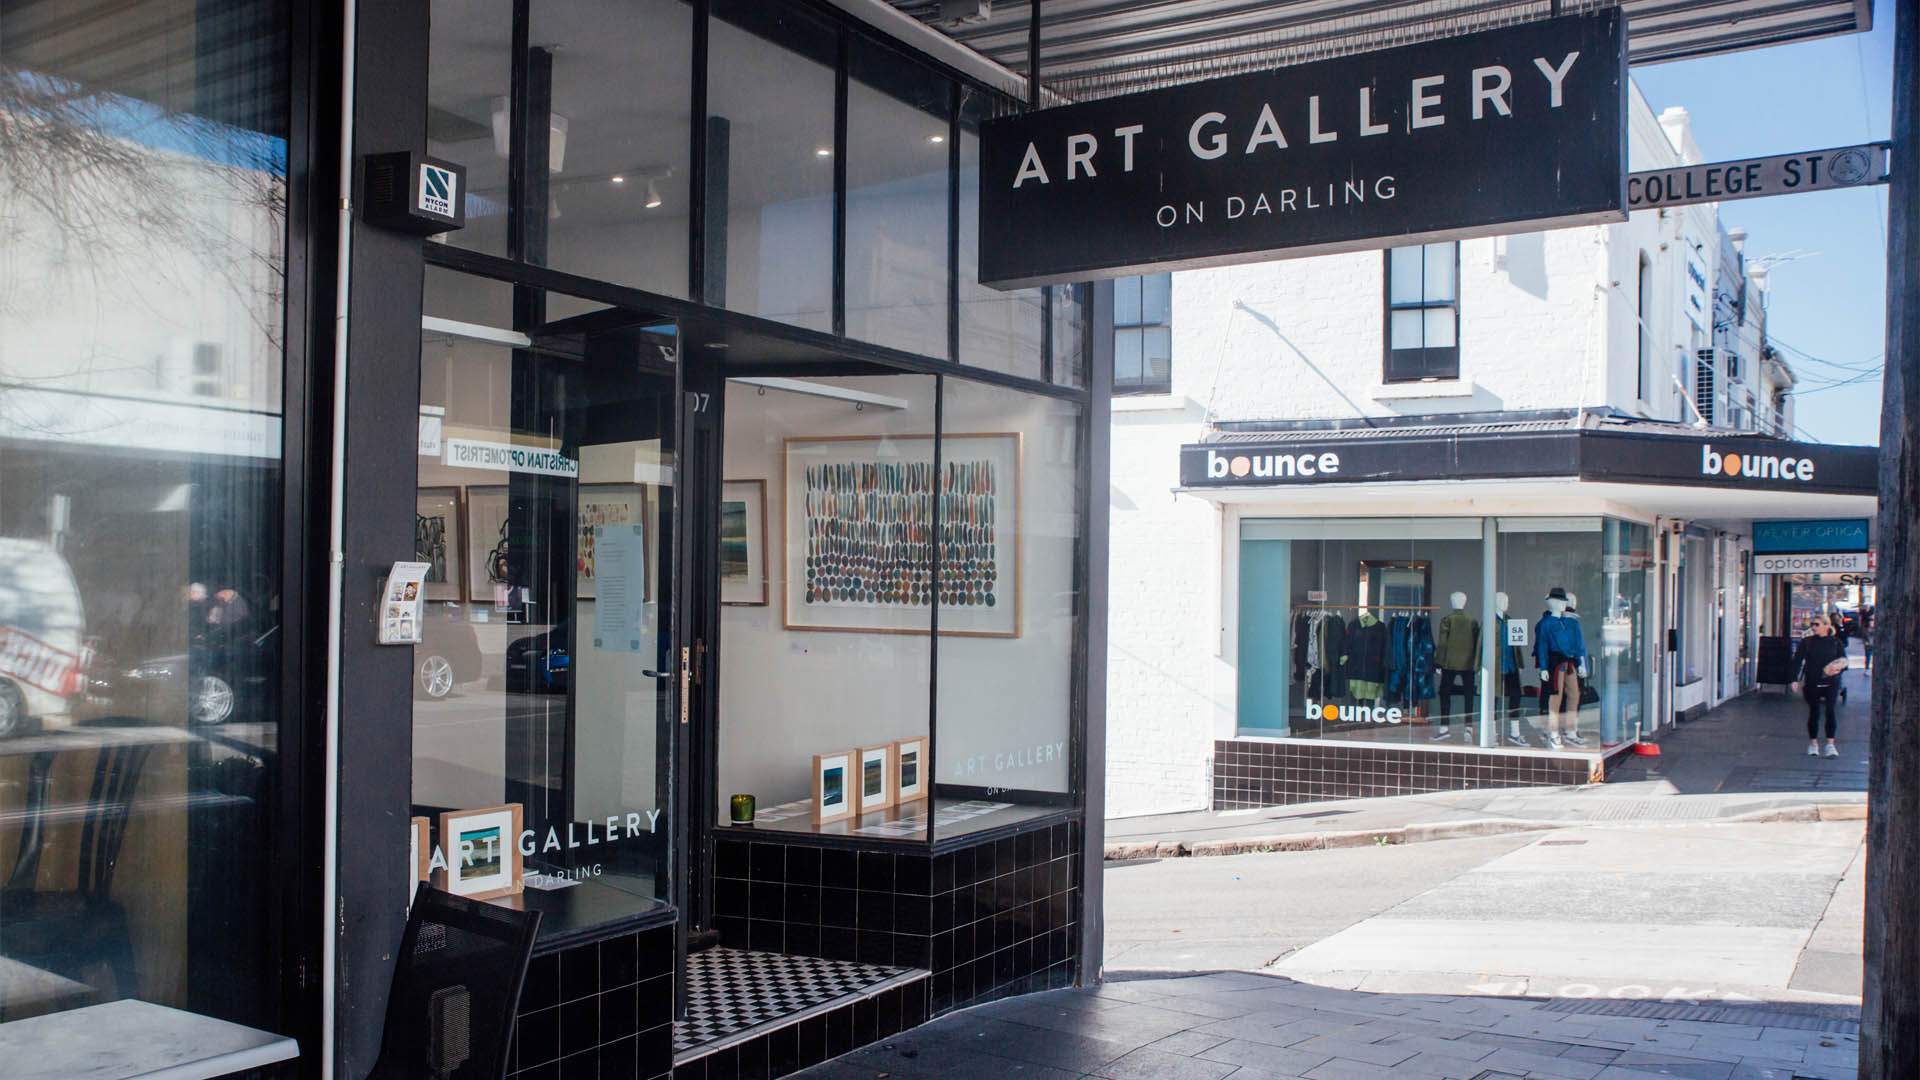 Art Gallery on Darling